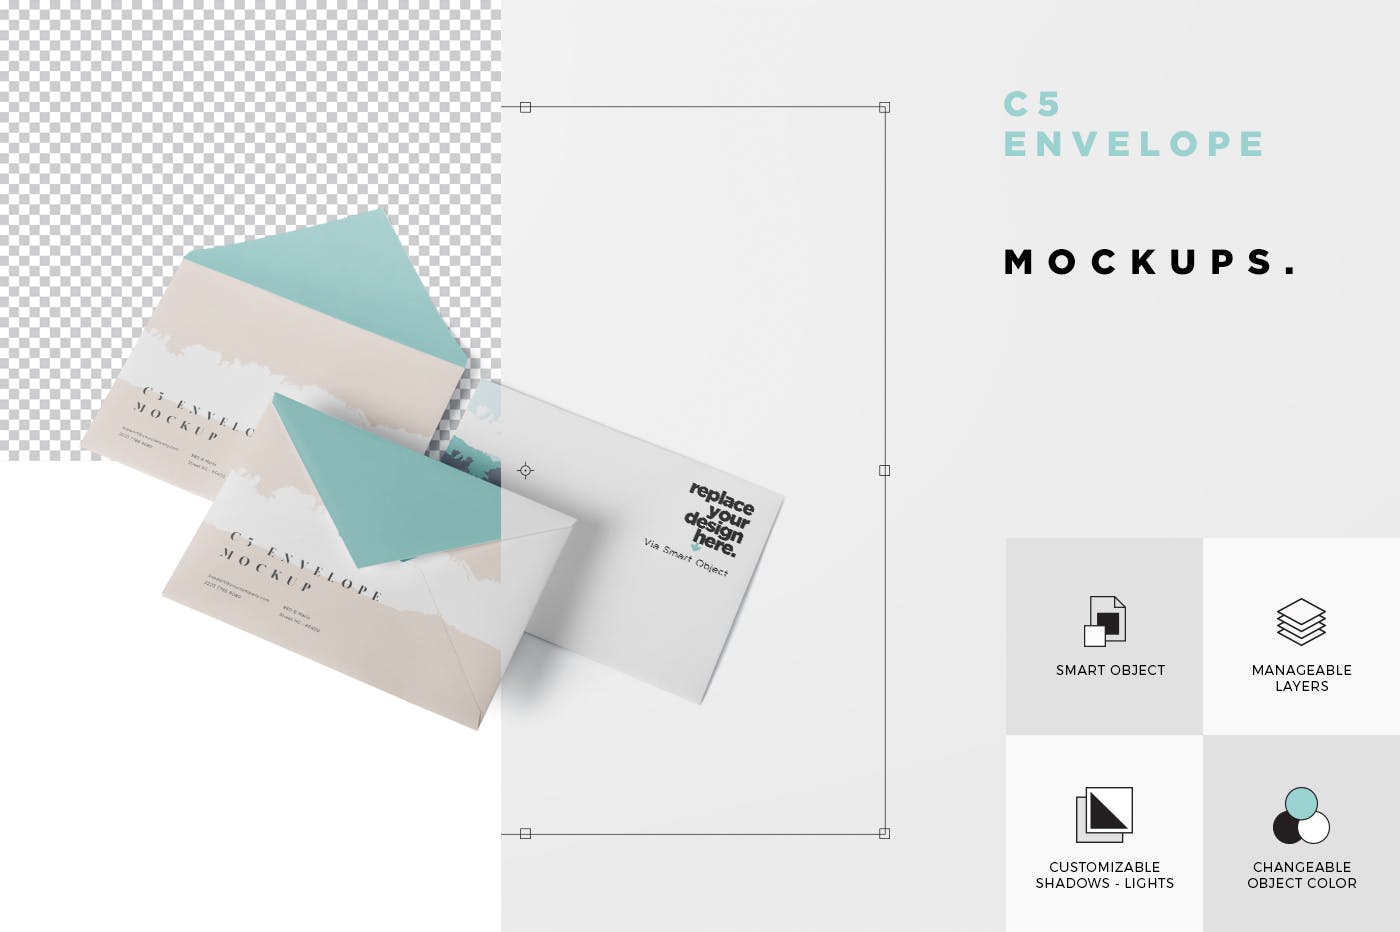 C5规格企业信封设计效果图素材中国精选 Envelope C5 Mock-Up Set插图(5)